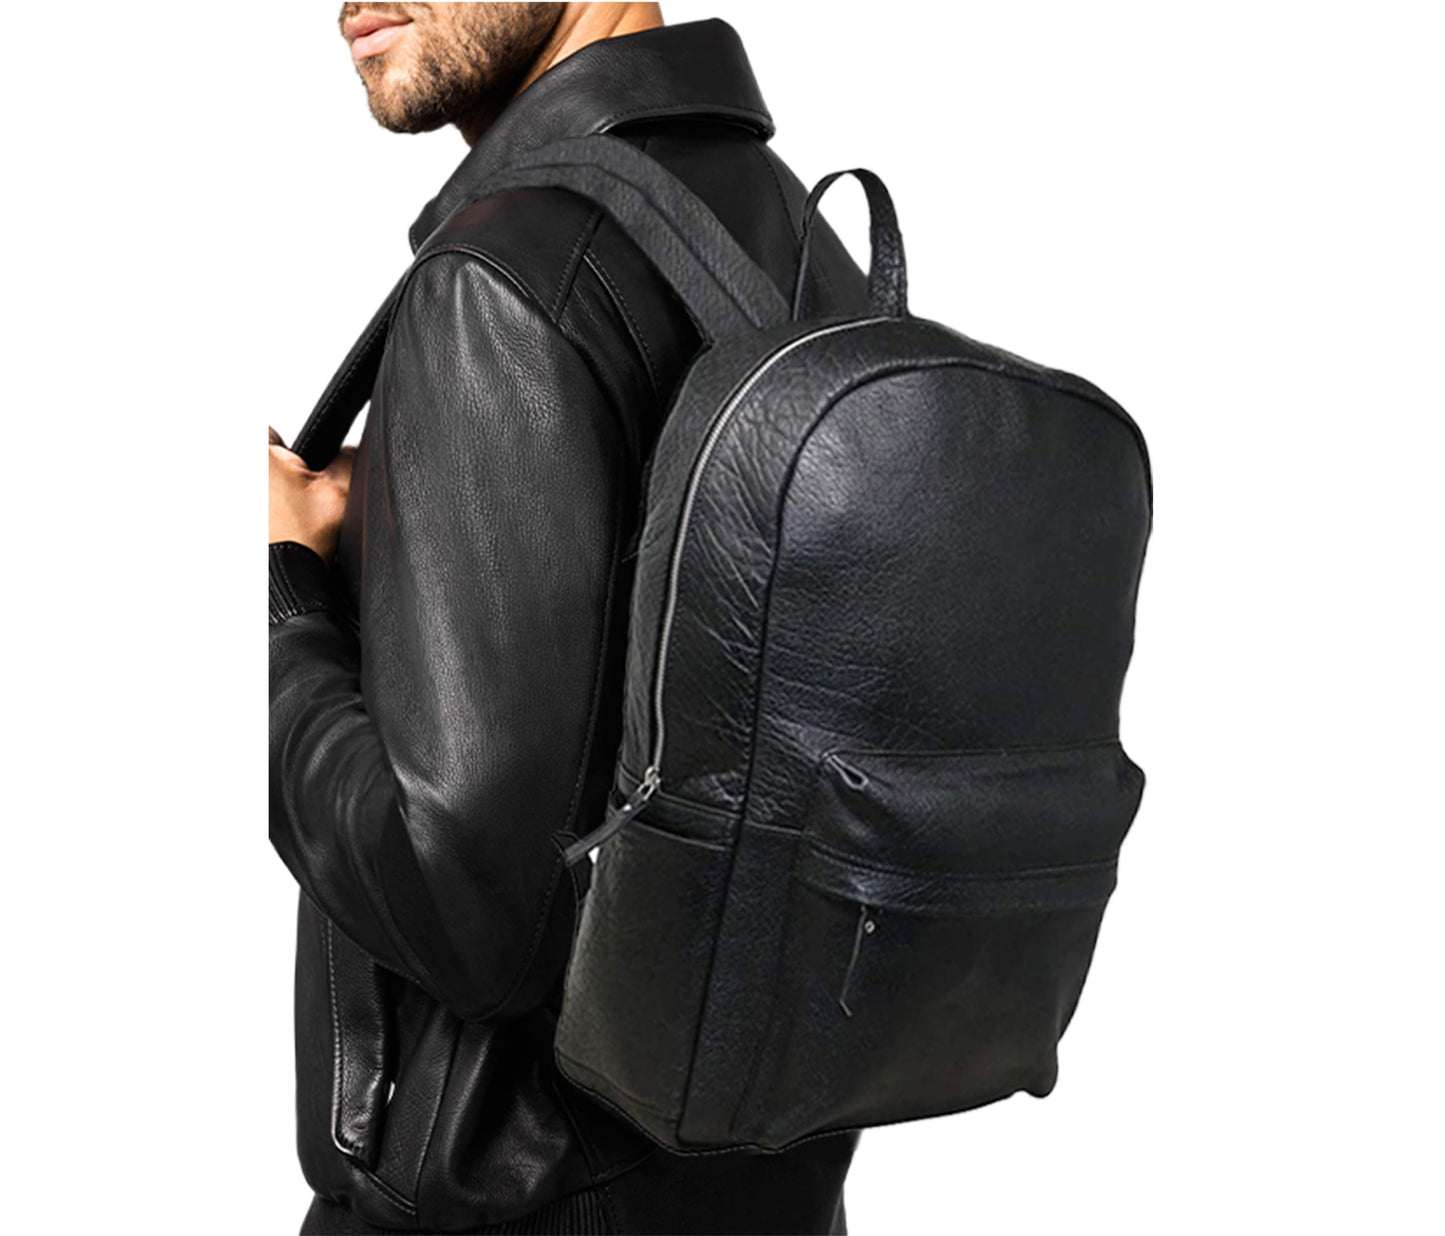 Alpha X Backpack